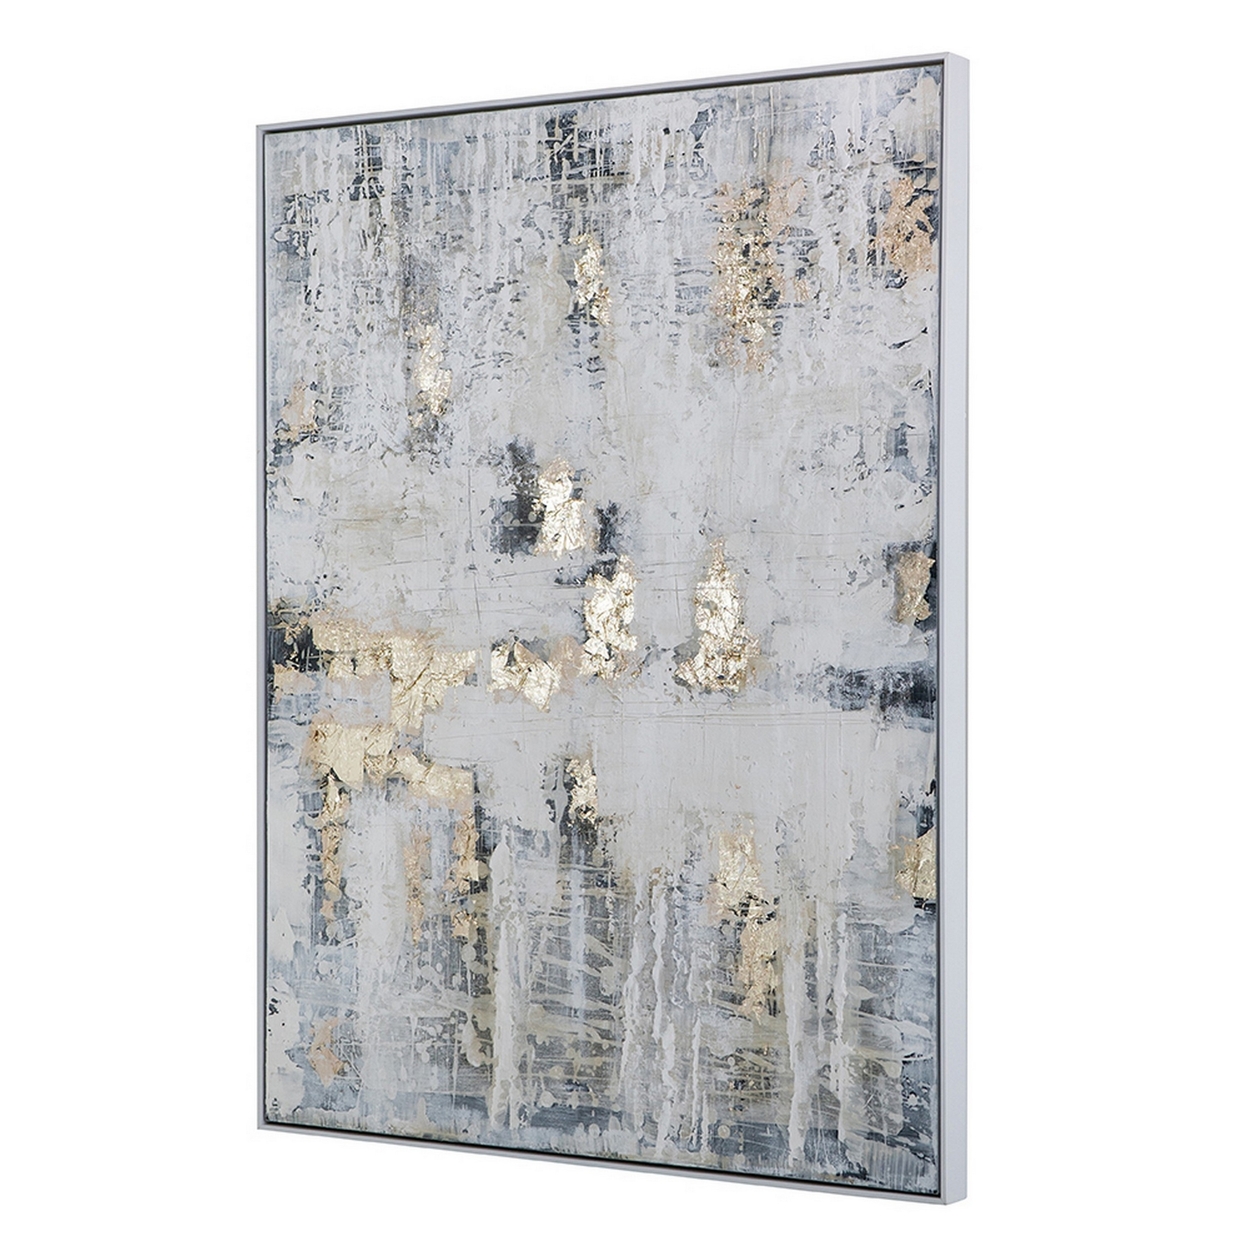 36 X 48 Inch Framed Wall Art, Hand Painted, White, Gray, Gold Brush Strokes- Saltoro Sherpi